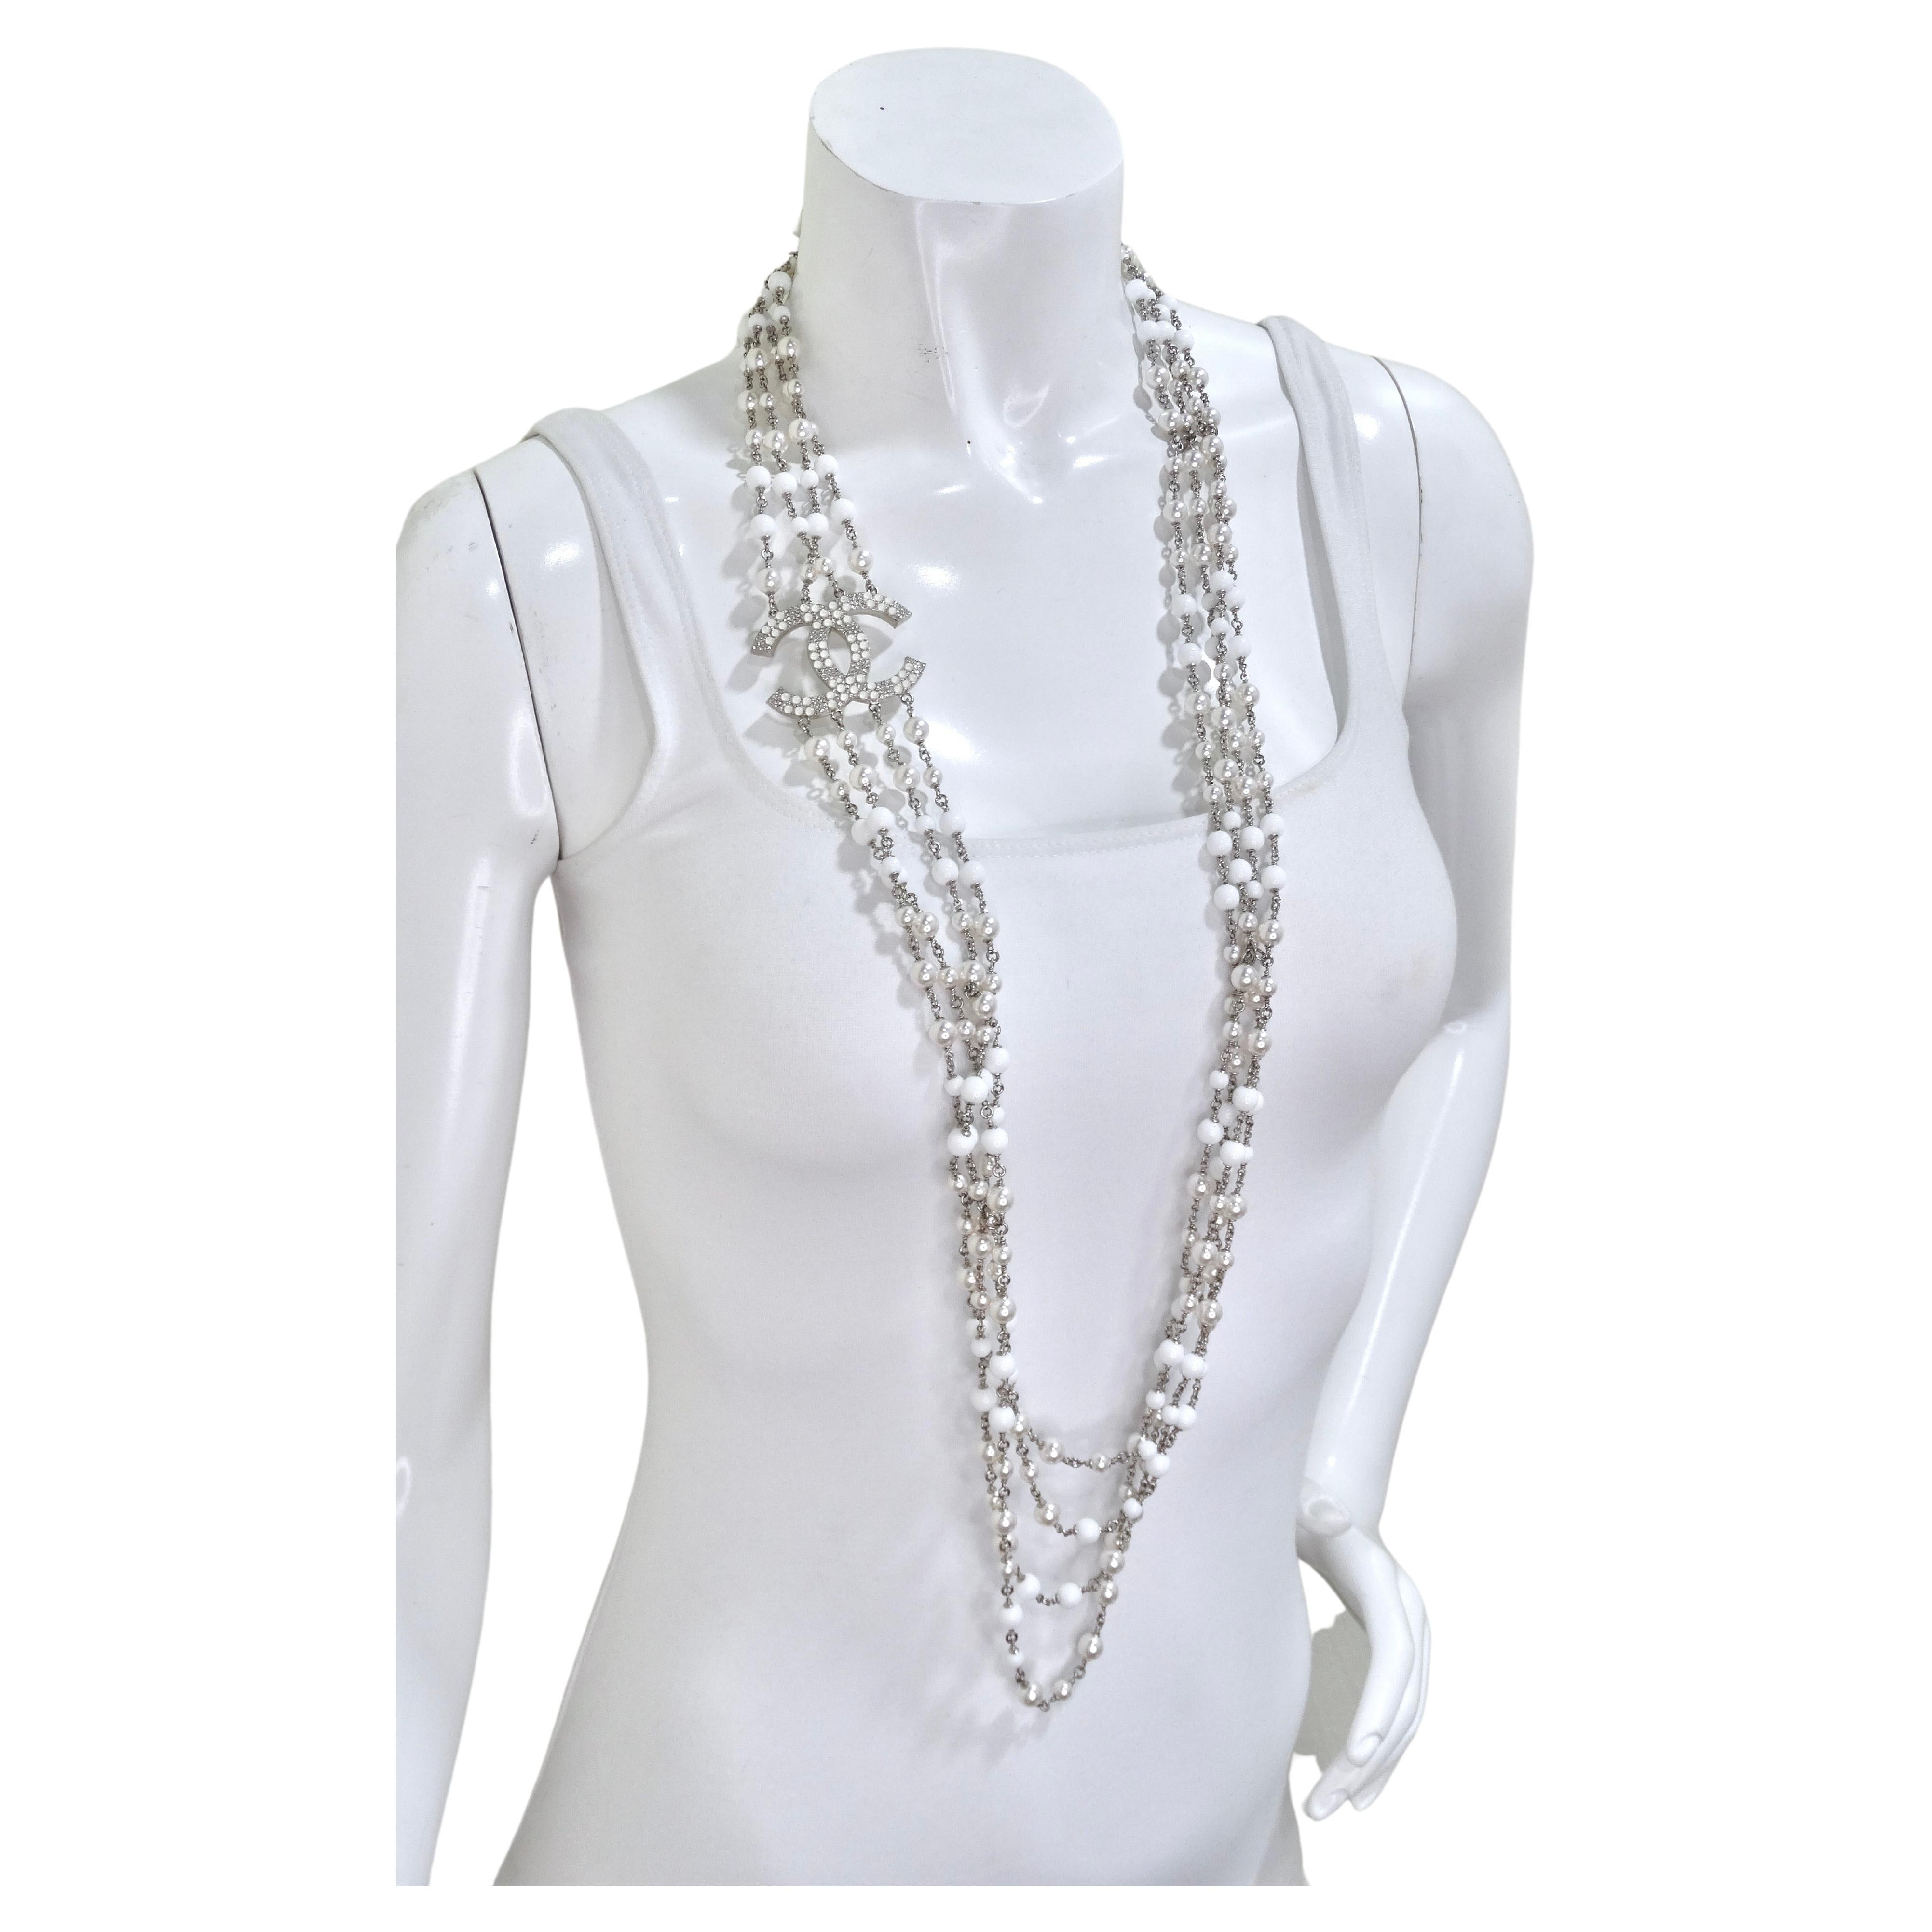 chanel cc logo pearl necklace